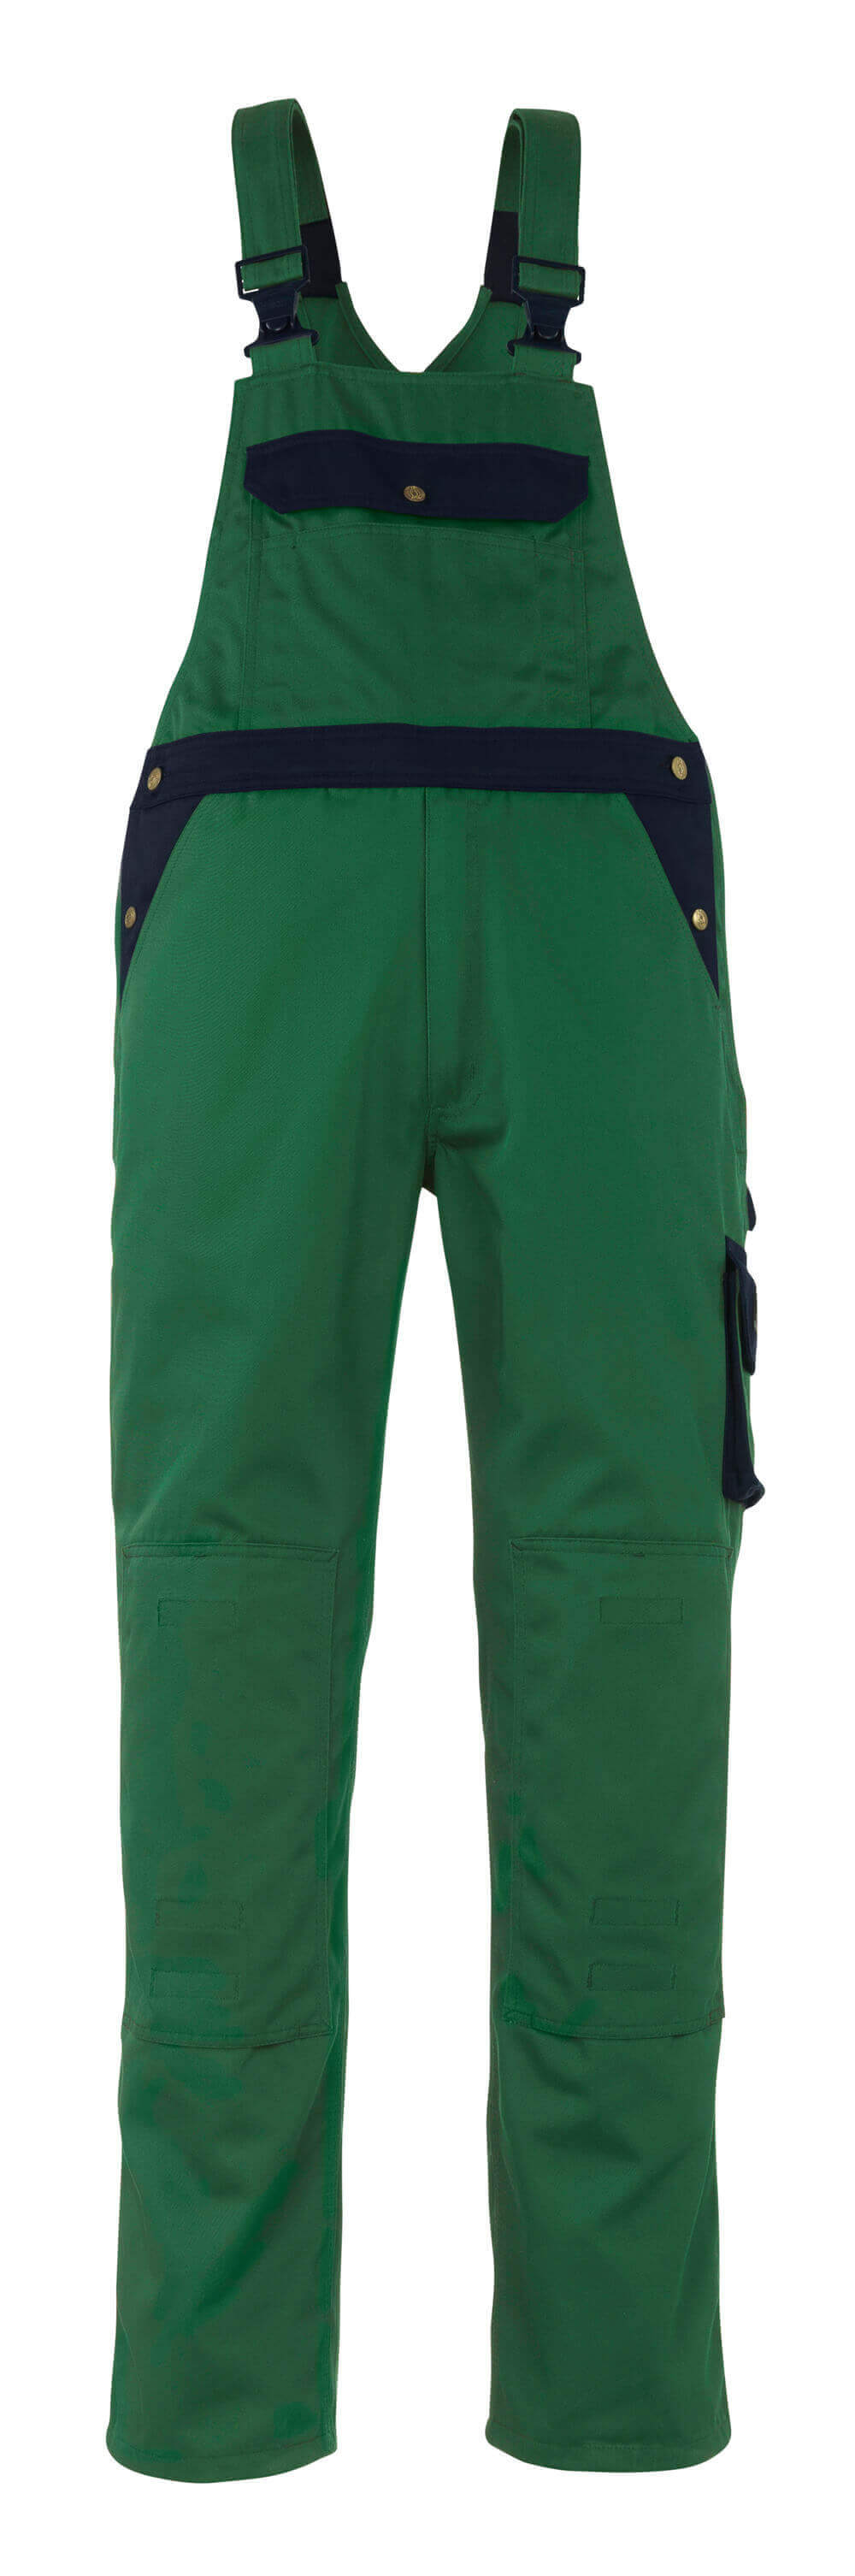 Mascot IMAGE  Milano Bib & Brace with kneepad pockets 00969 green/navy